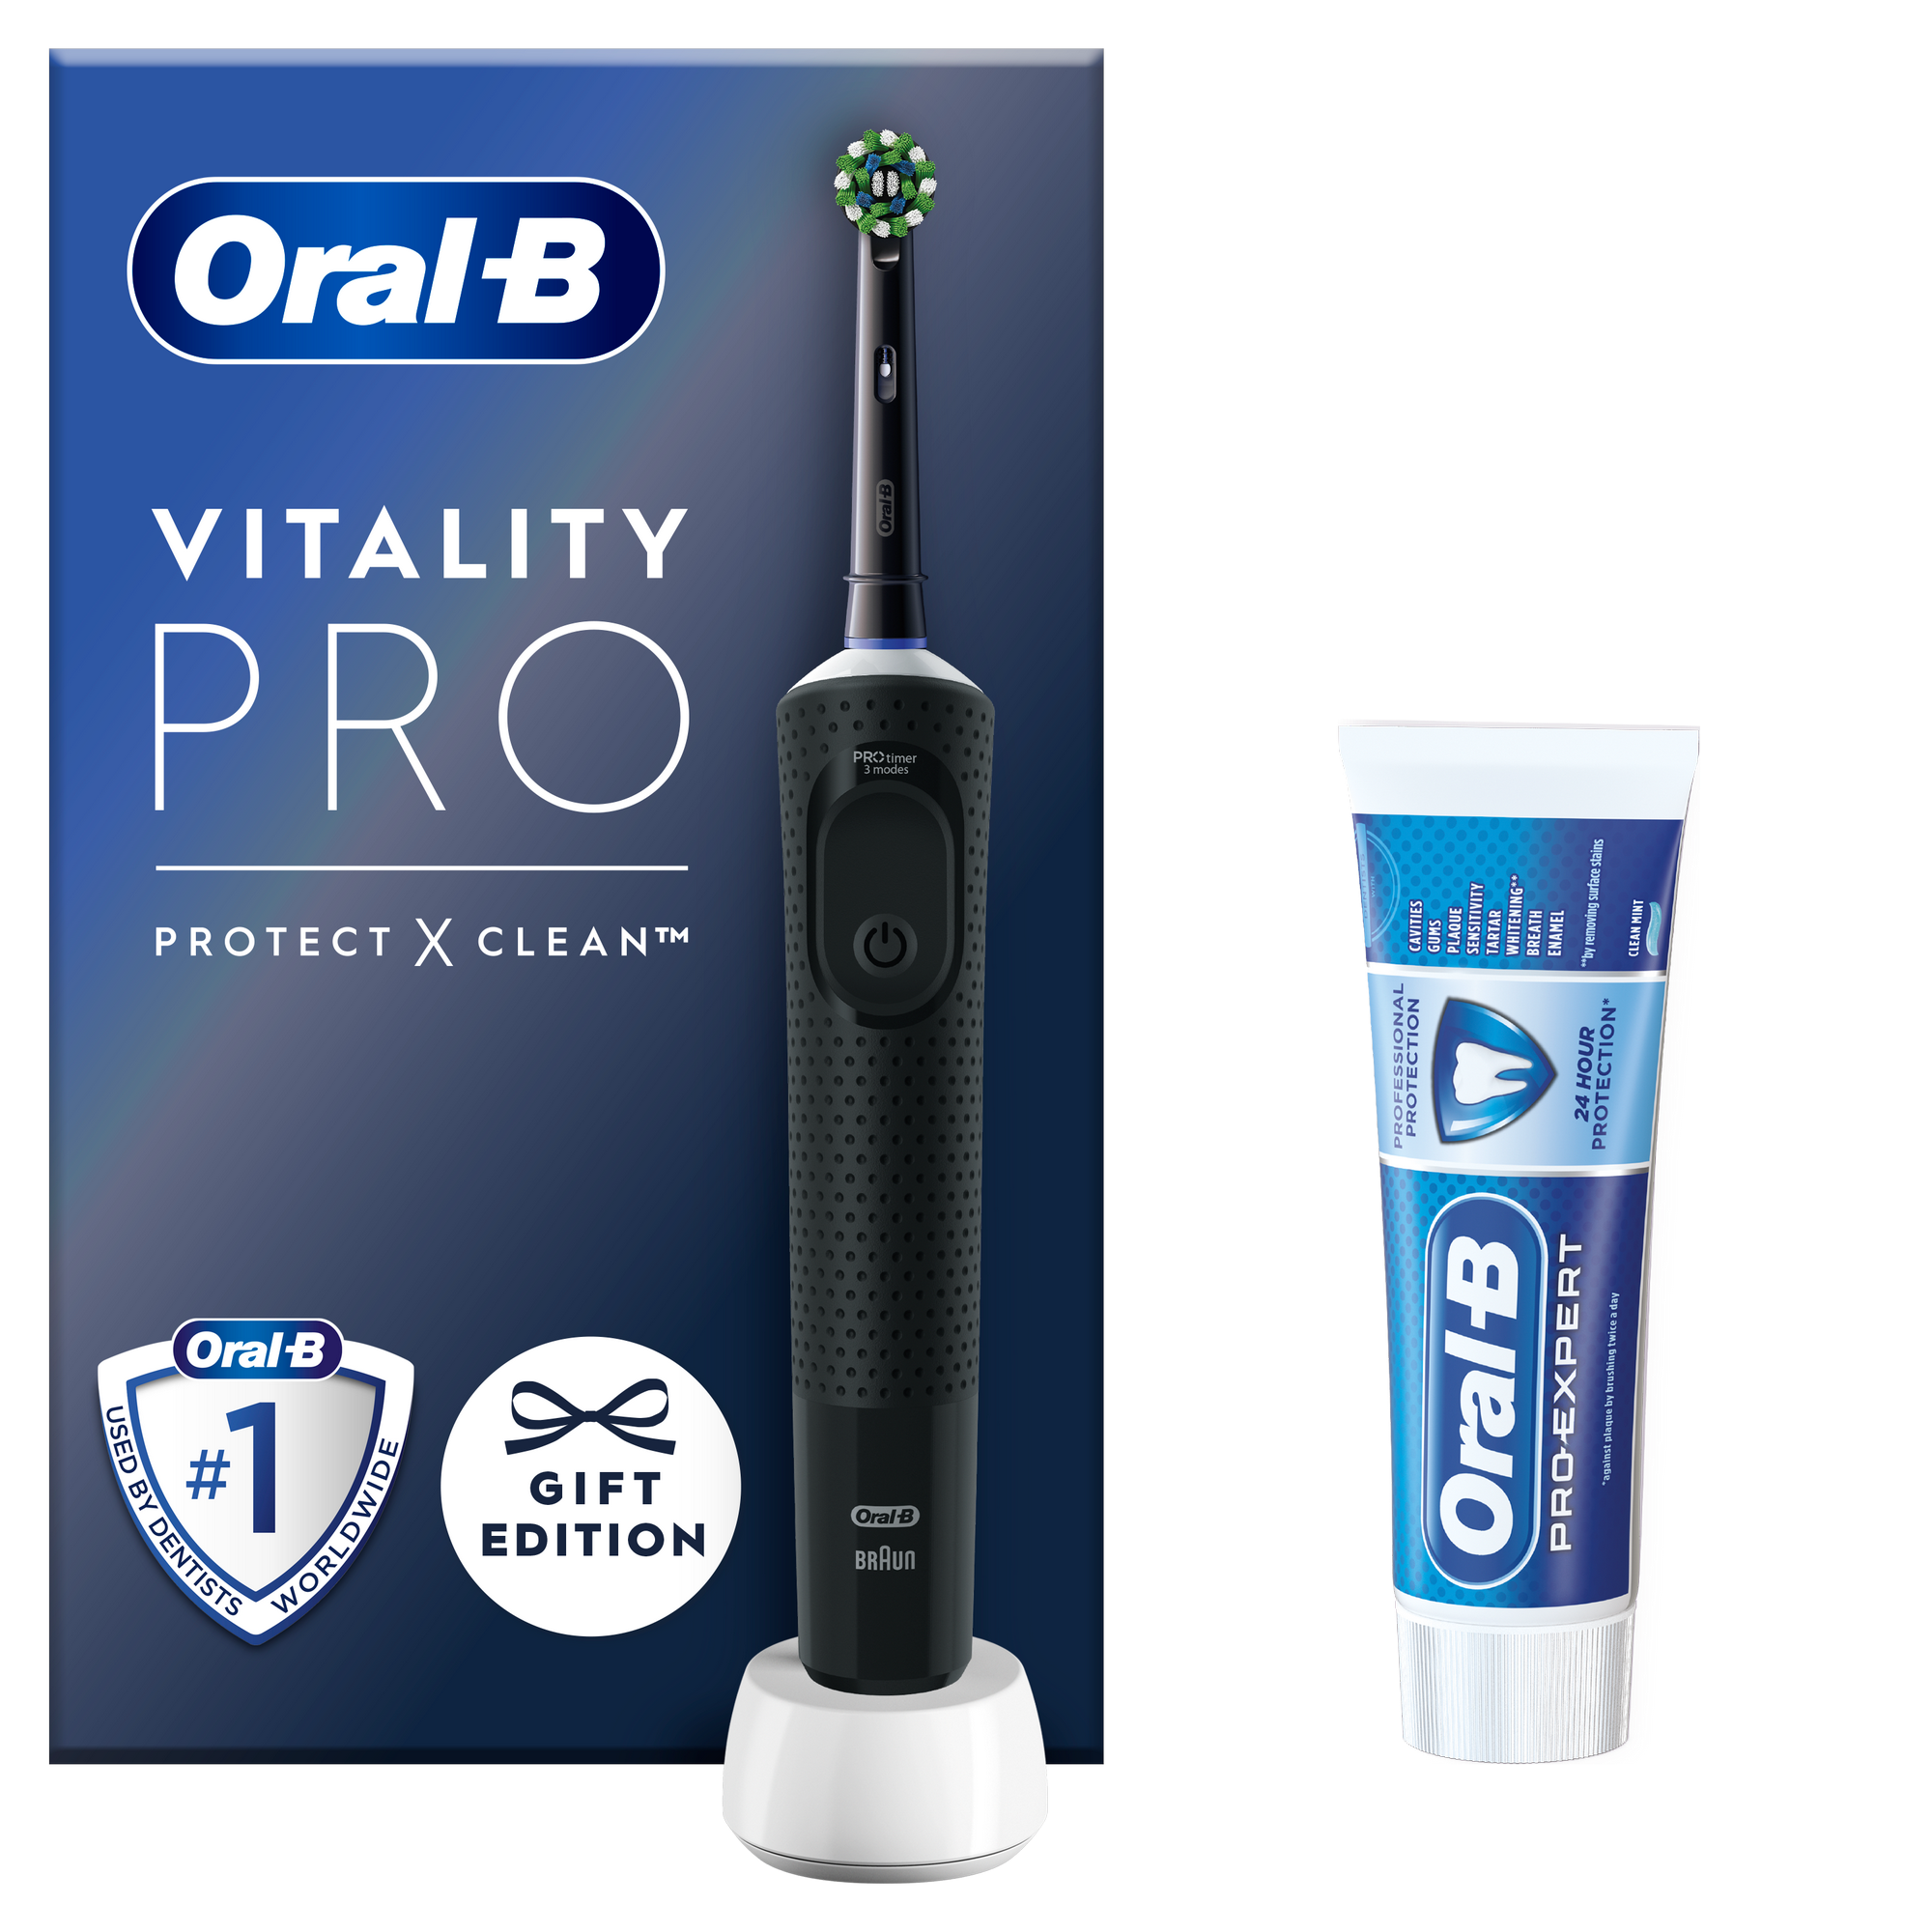 Oral B Vitality Pro Black Electric Toothbrush Set